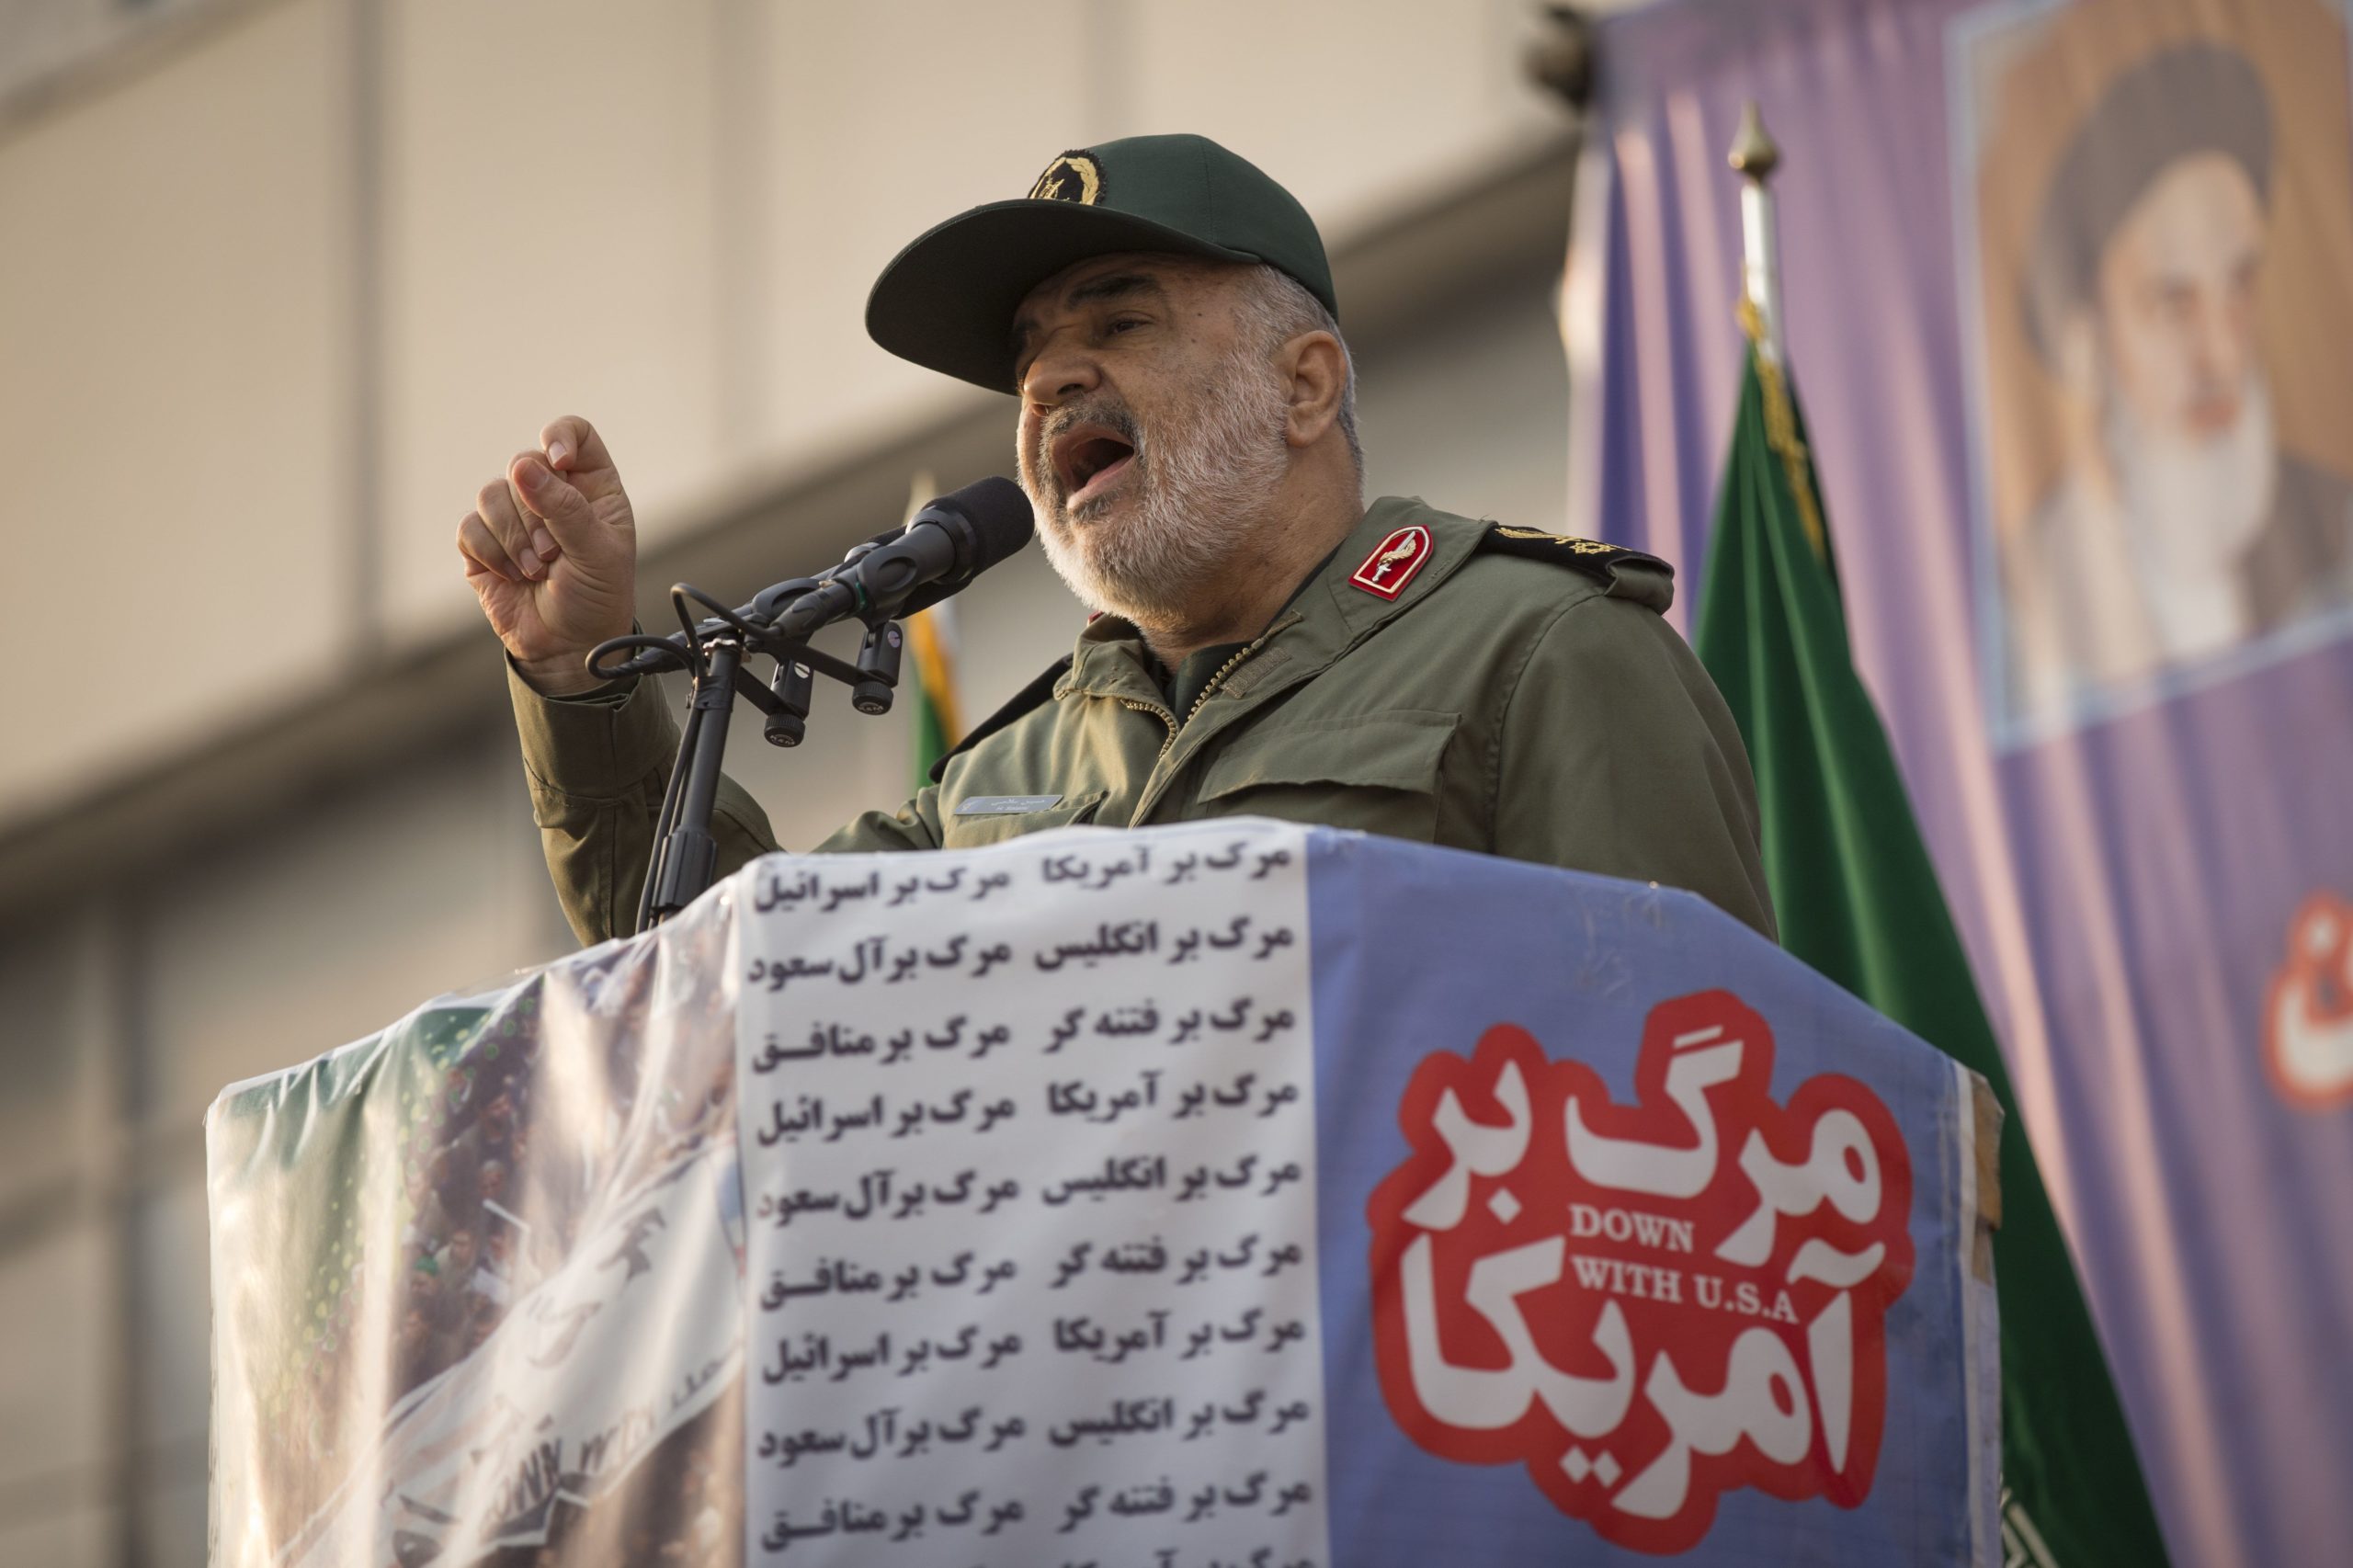 25/11/2019 El jefe de la Guardia Revolucionaria de Irán, Hosein Salami
POLITICA INTERNACIONAL
Rouzbeh Fouladi/ZUMA Wire/dpa
